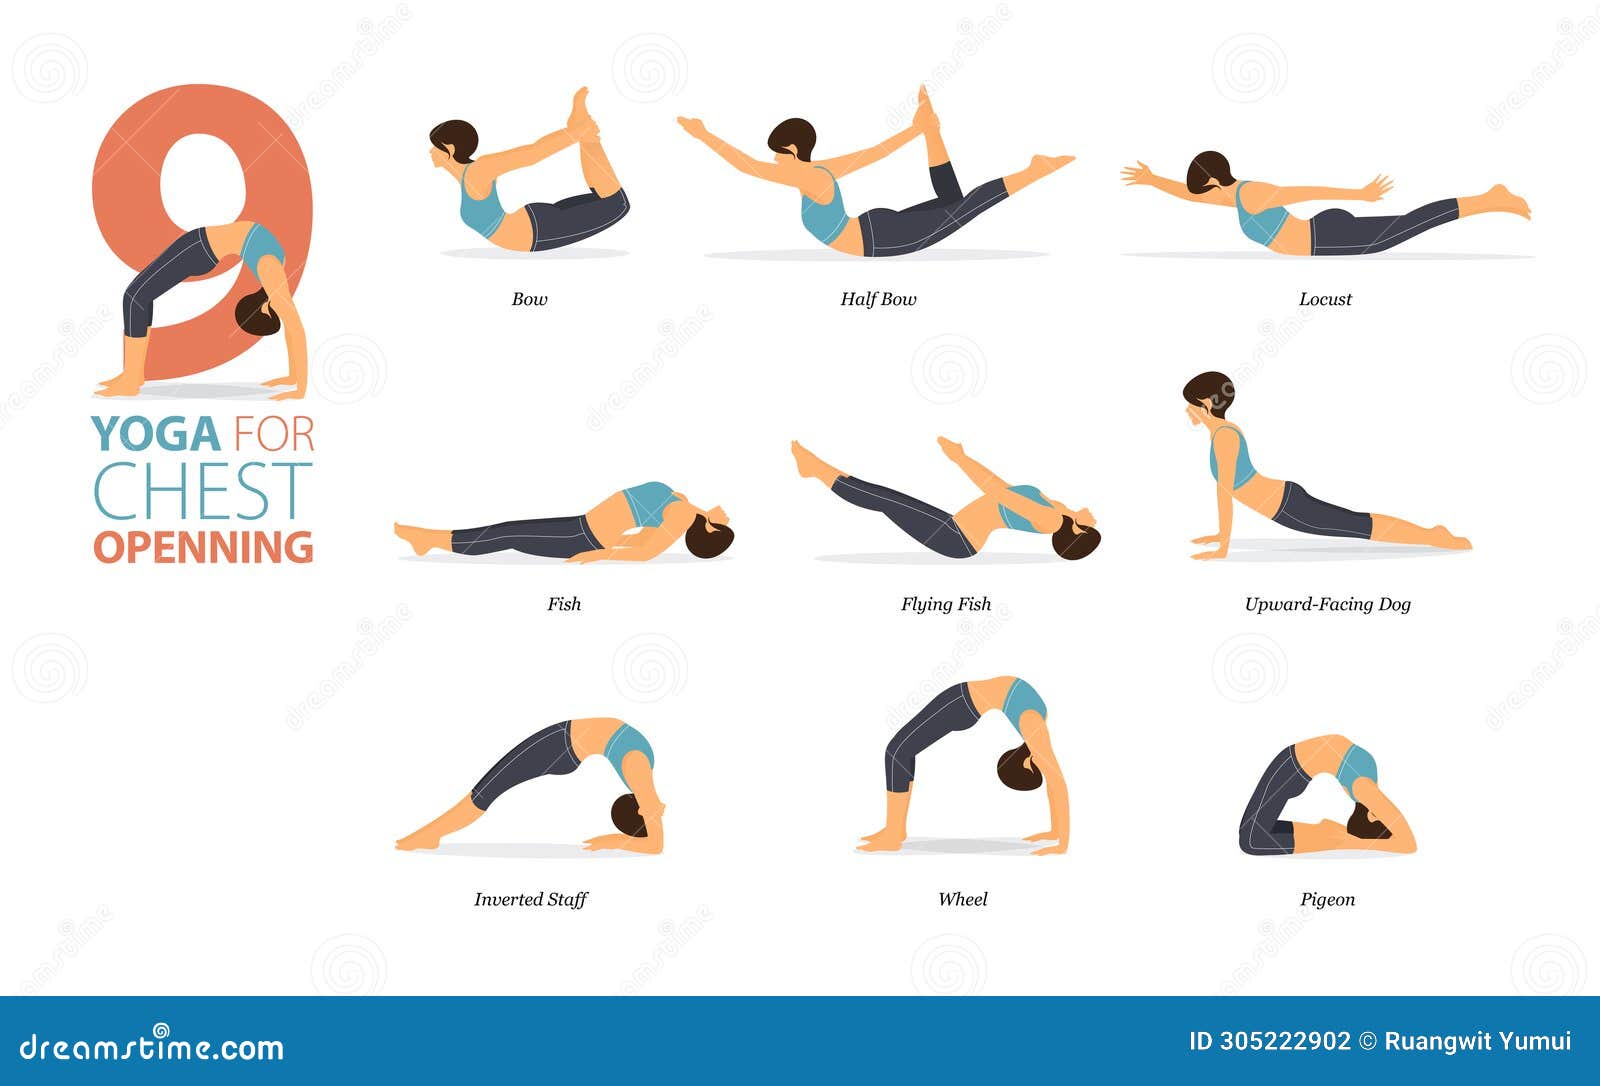 6 Yoga Breathing Exercises + Poses to Breathe Better | YouAligned.com